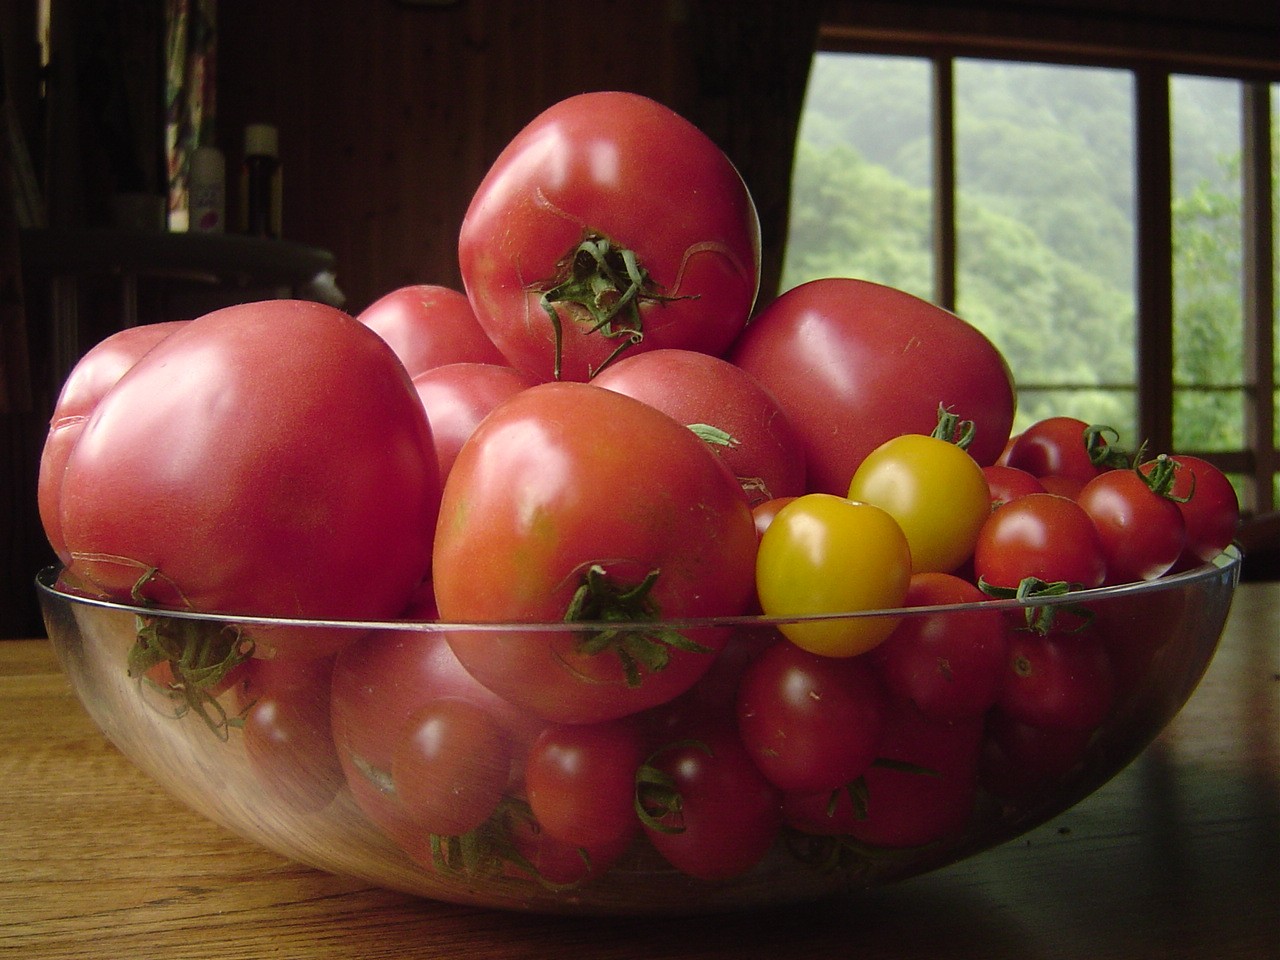 Tomato (248k image)